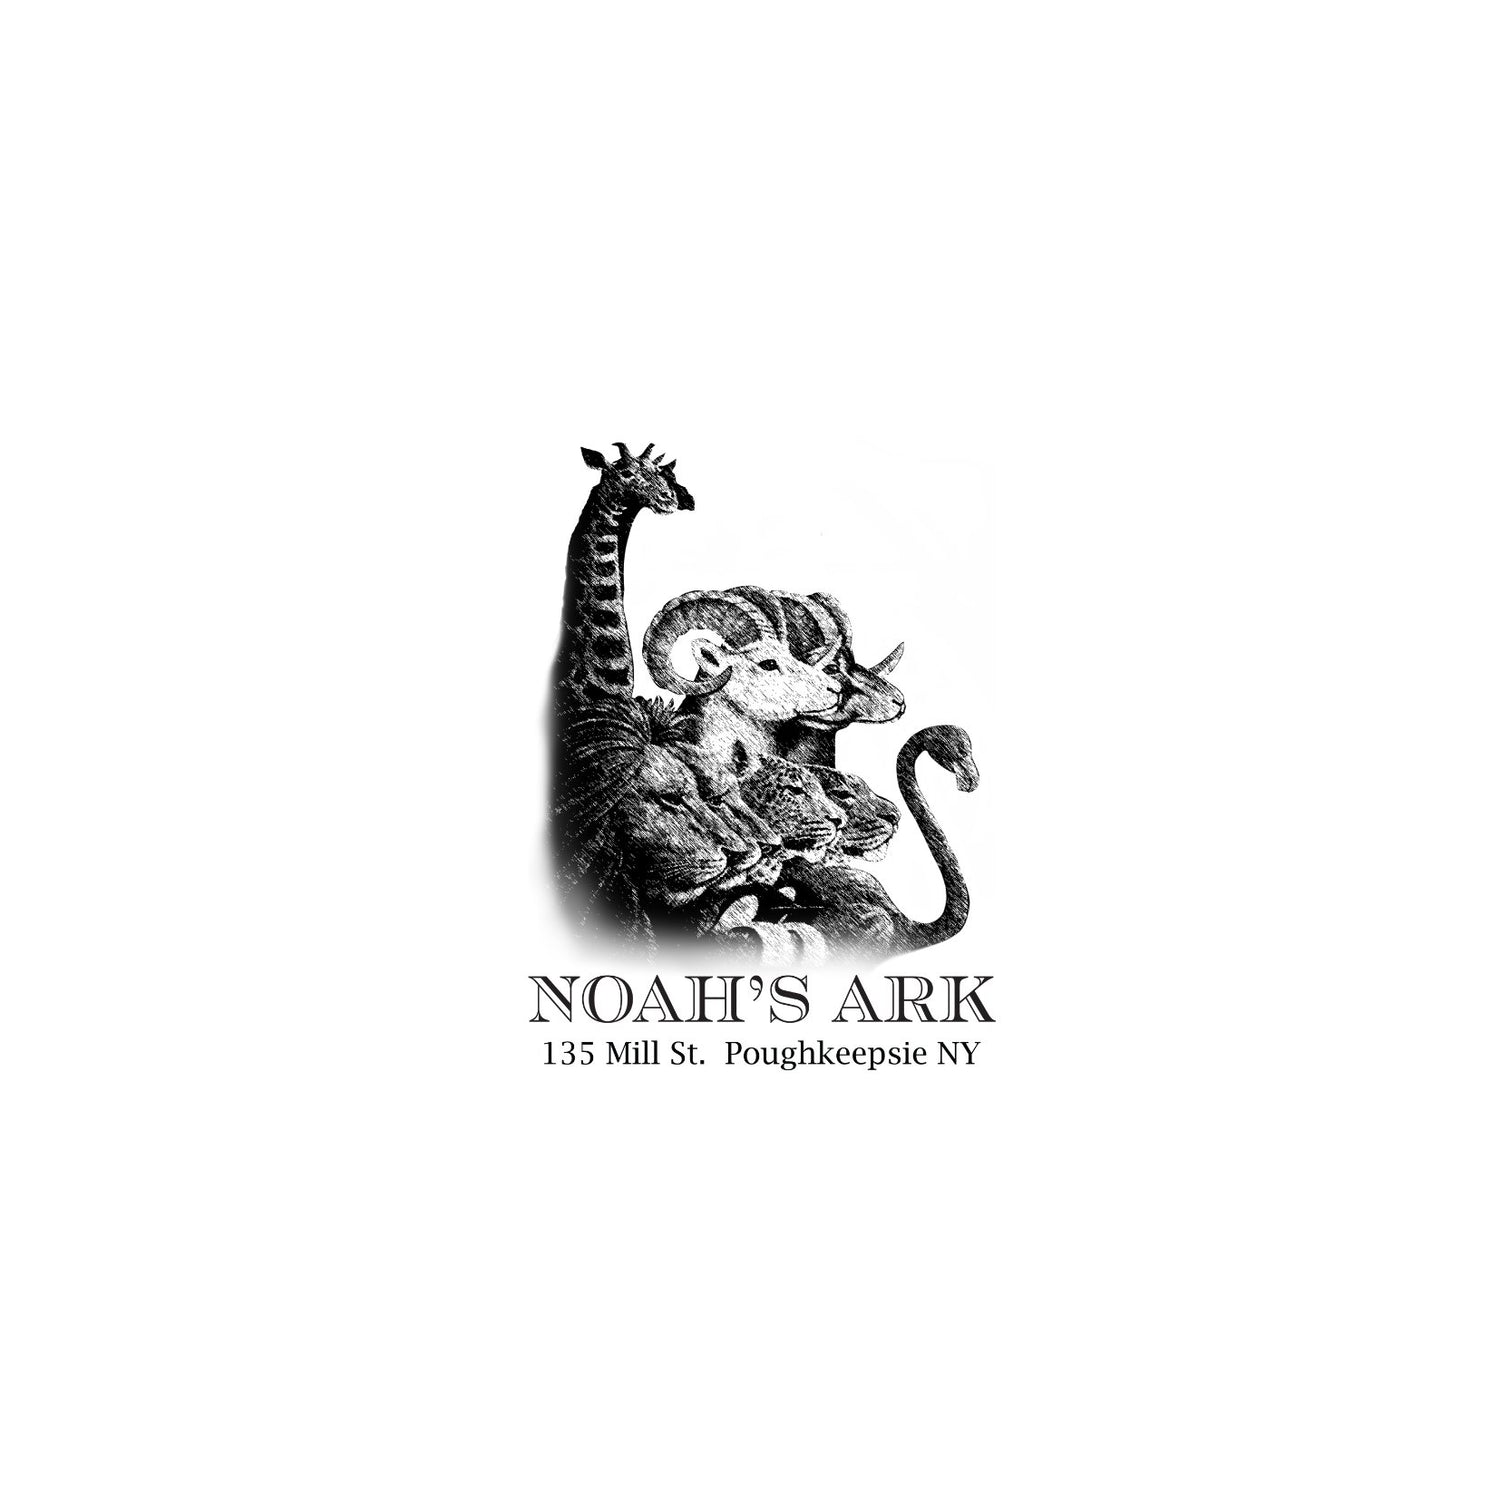 Noah's Ark Poughkeepsie